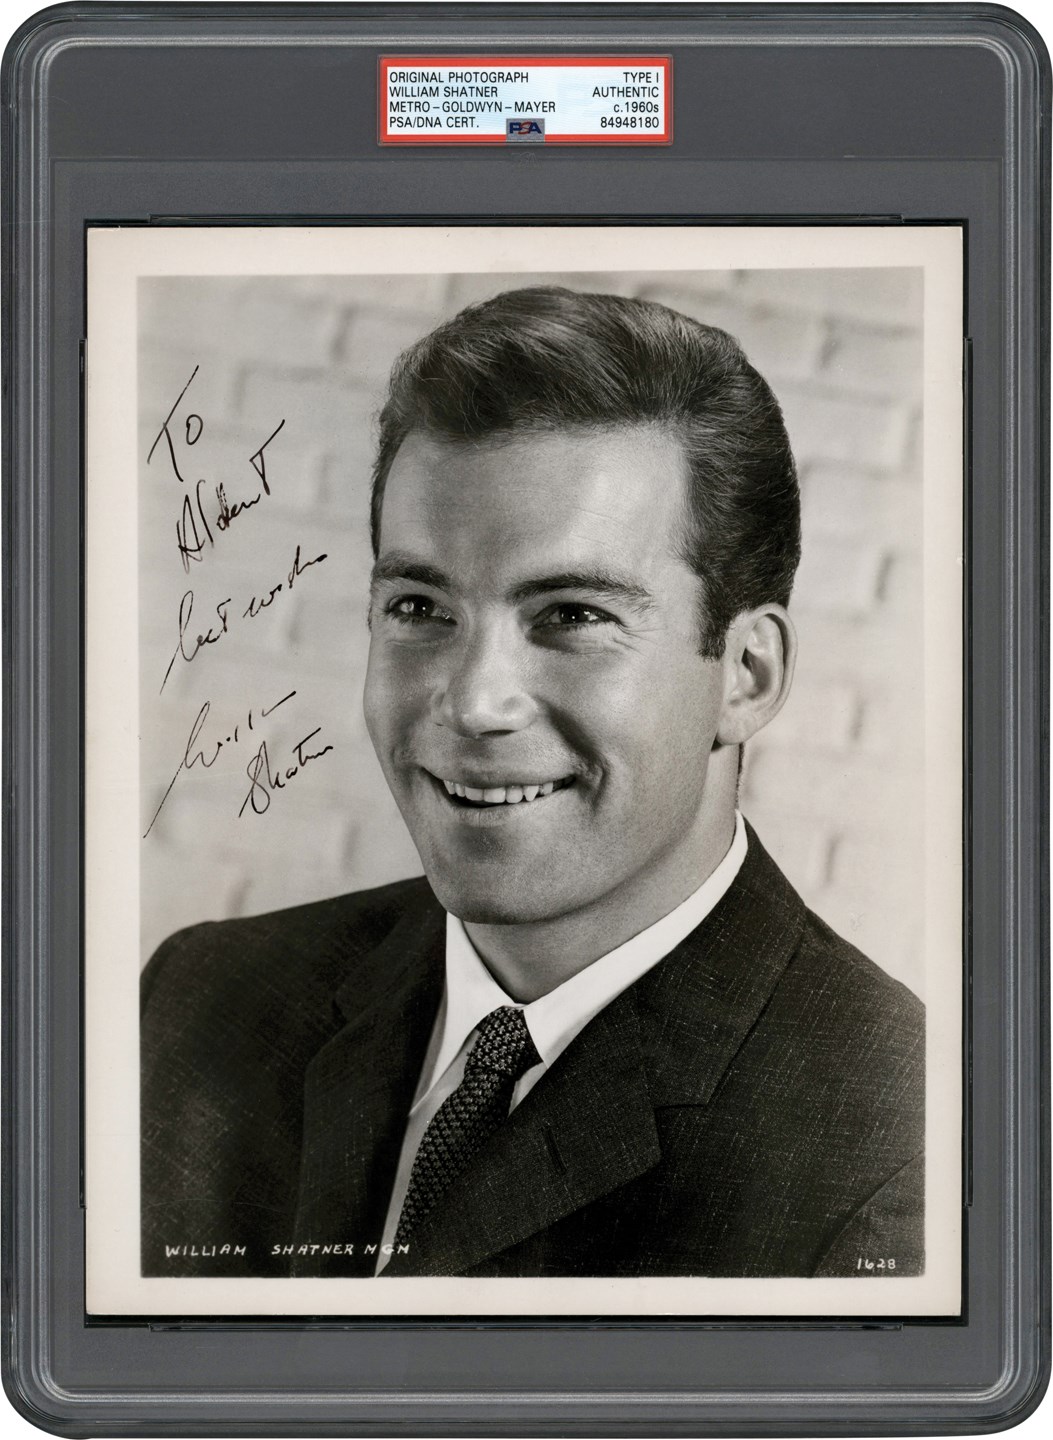 Circa 1959 Early William Shatner Signed Photograph (PSA Type I)